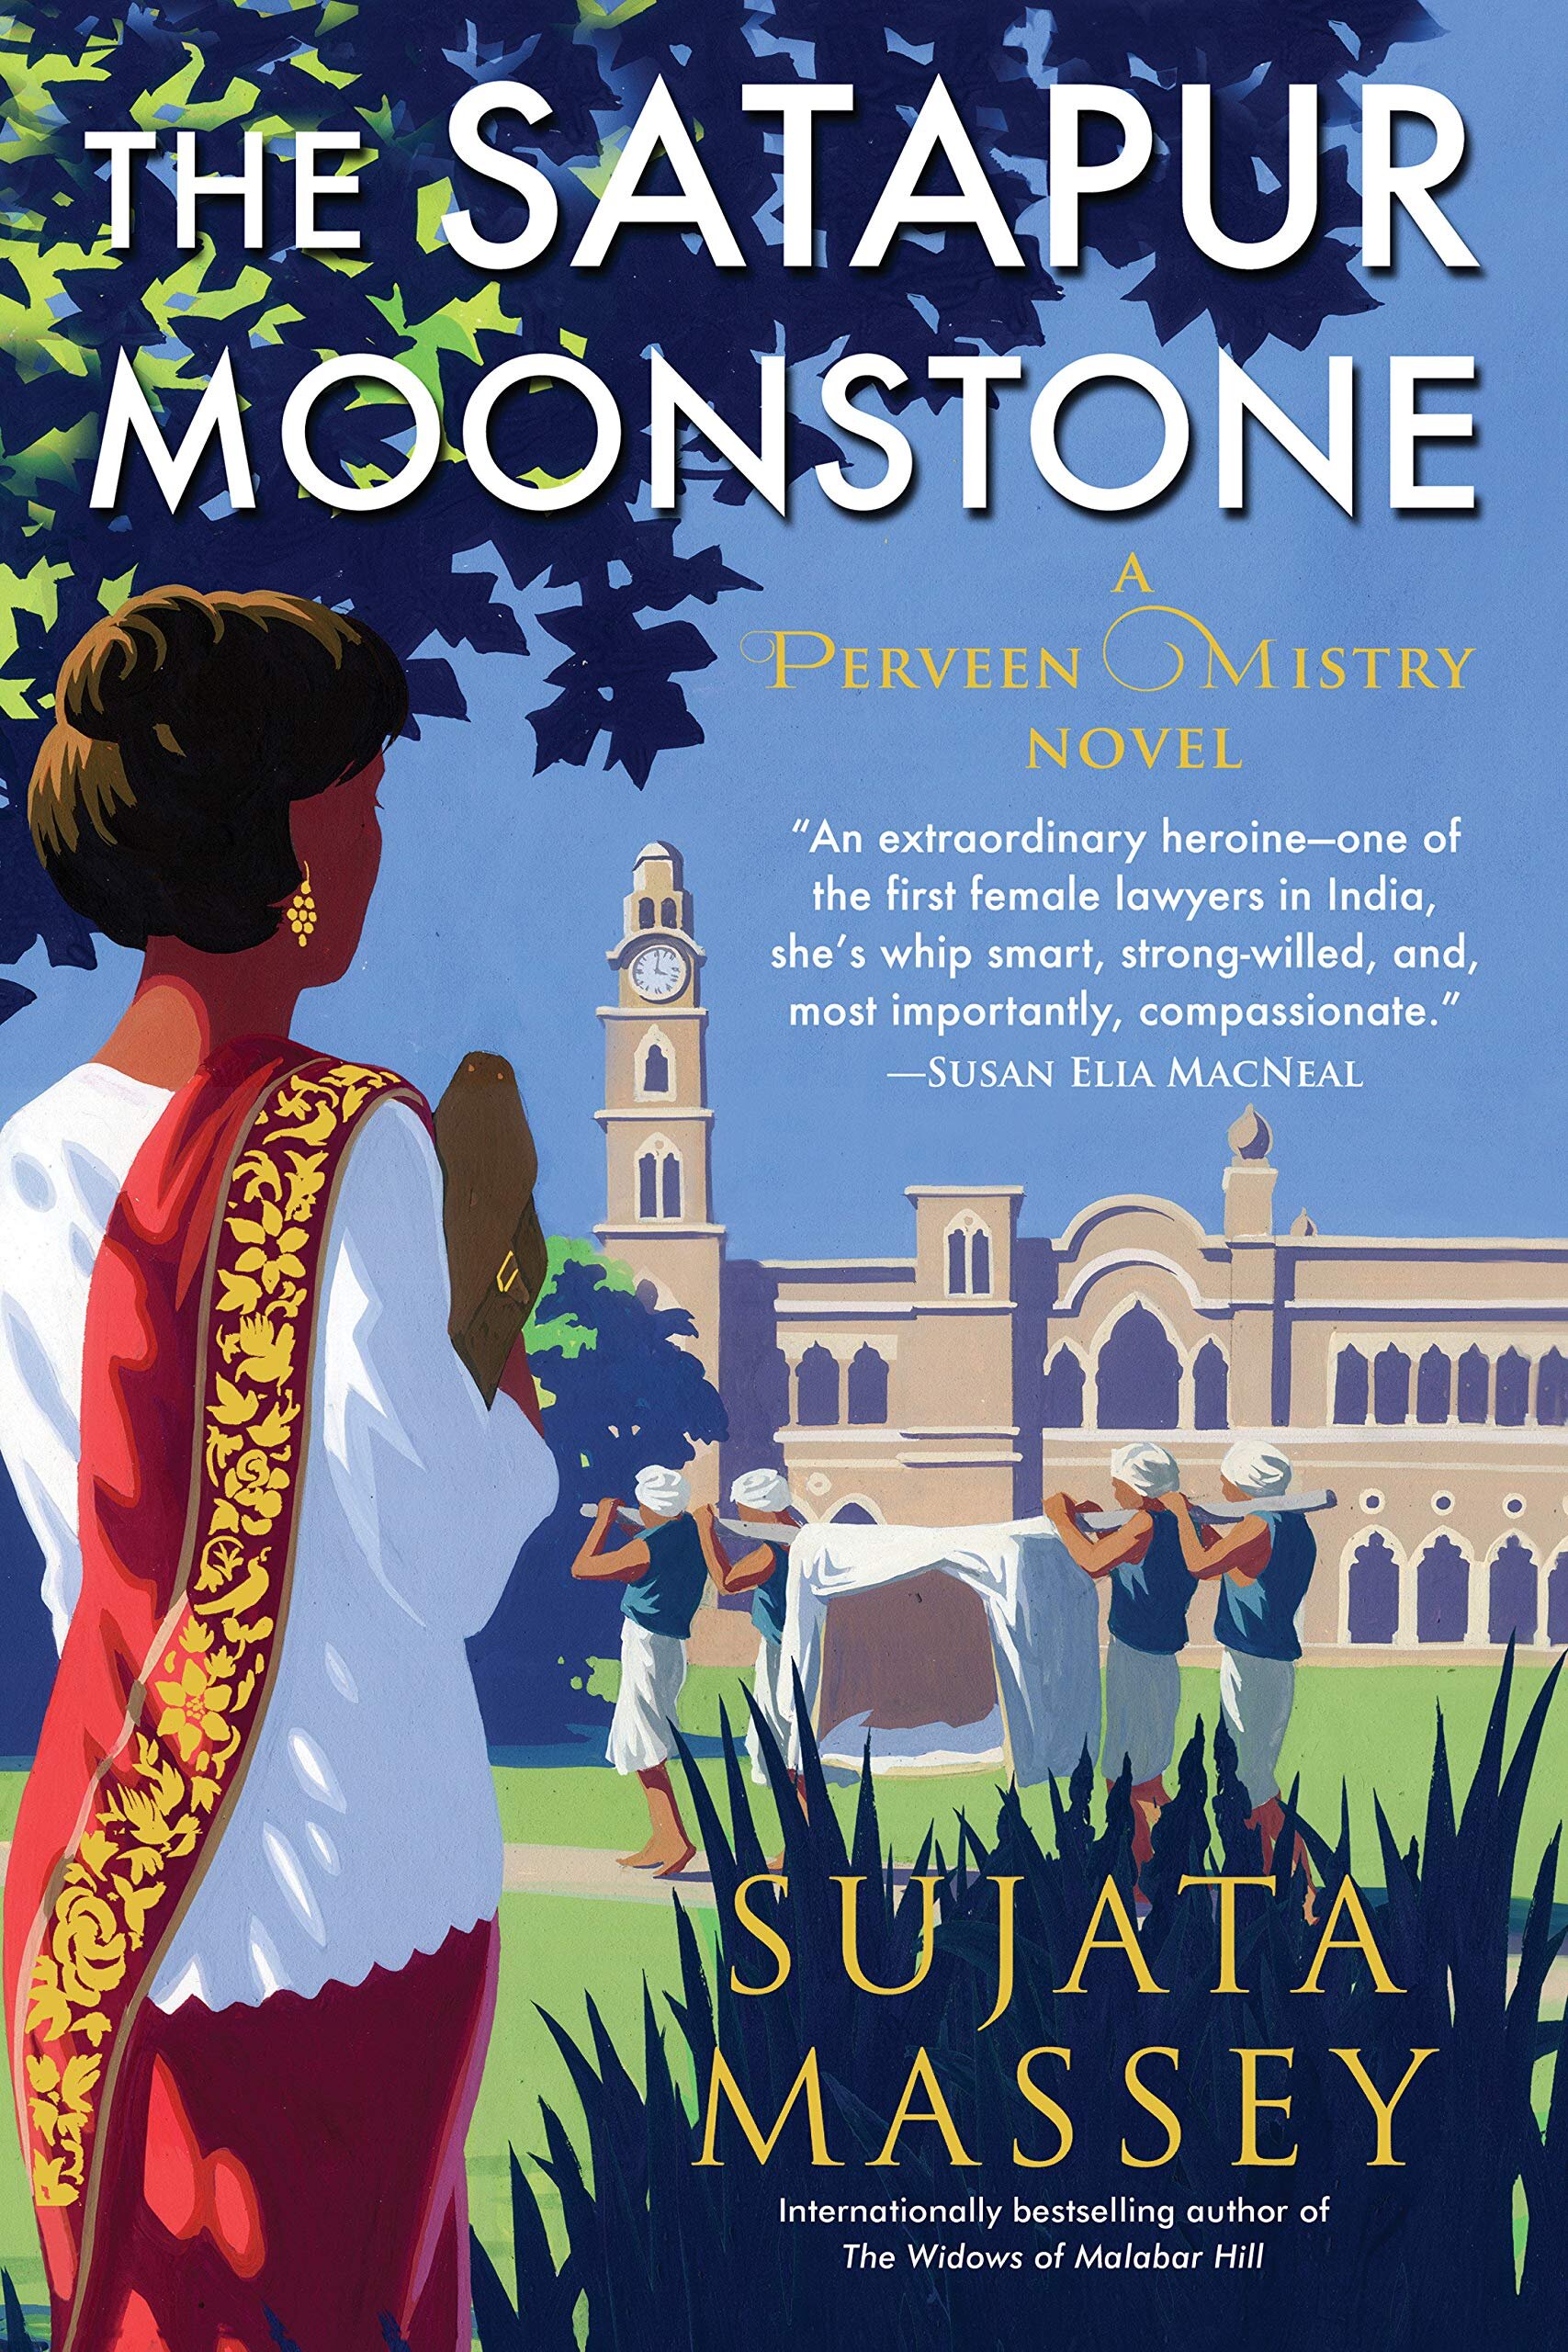 Mystery The Satapur Moonstone a Perveen Mistry Novel by Sujata Massey.jpg